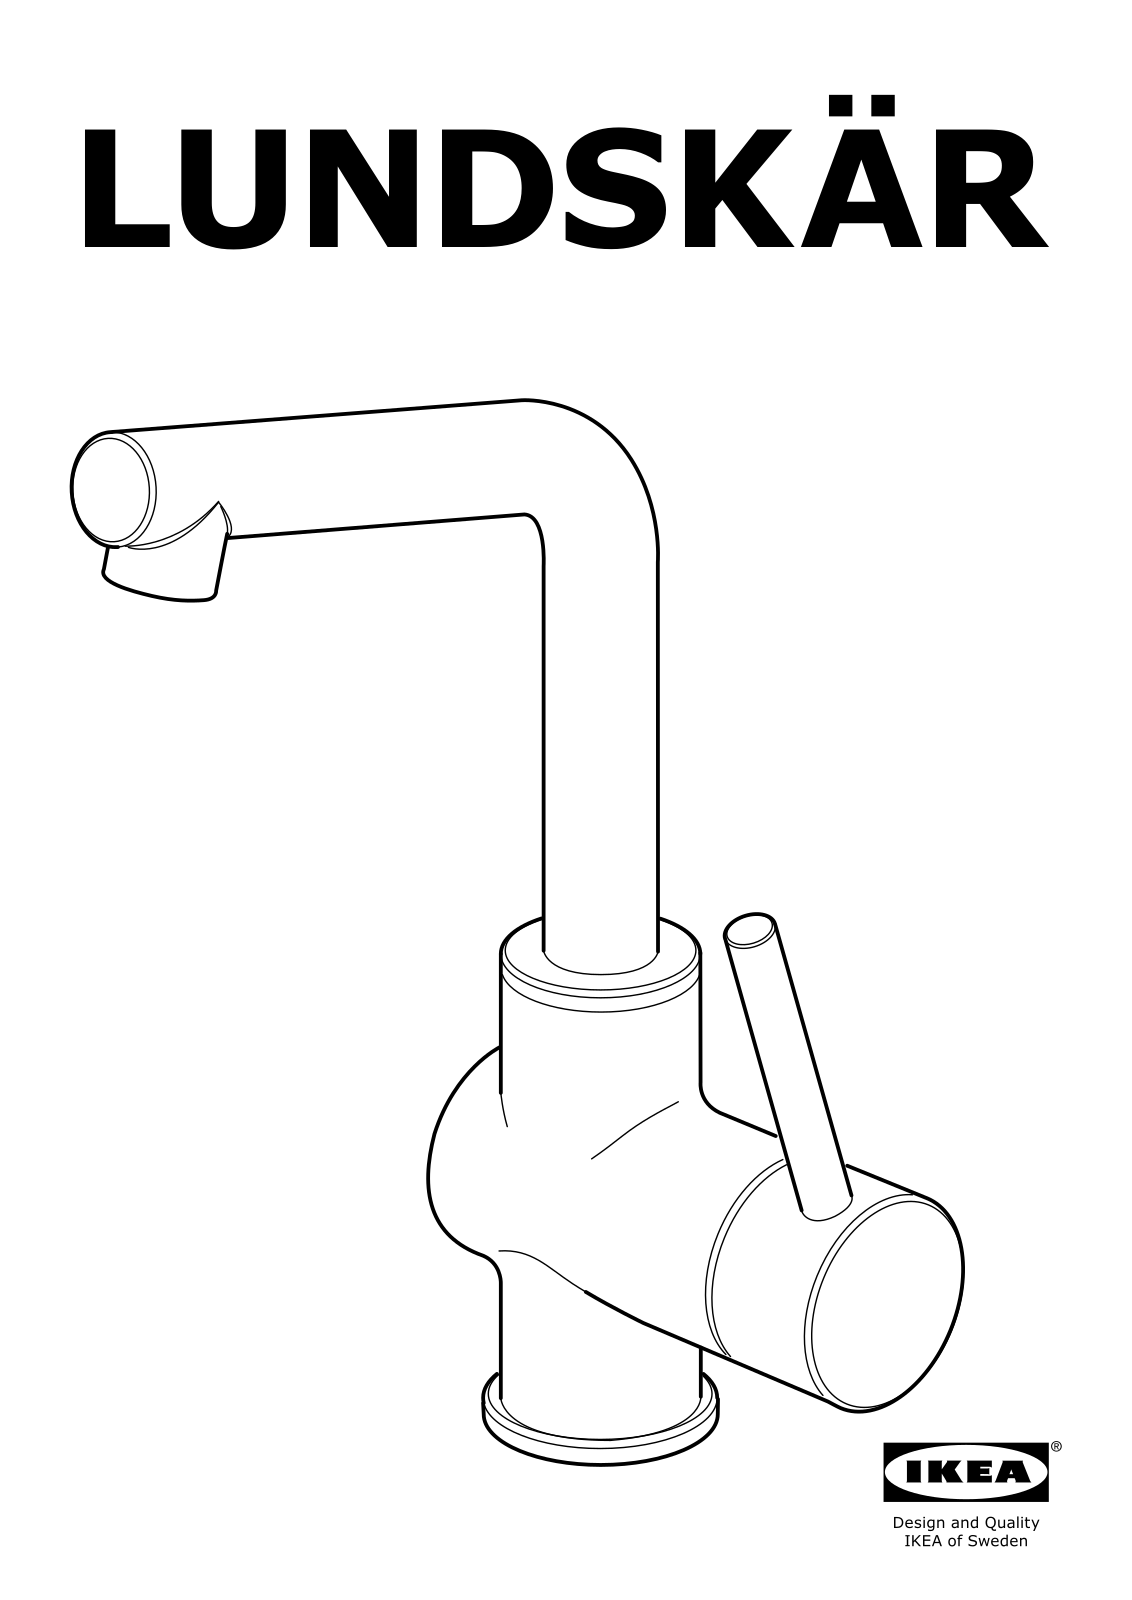 IKEA LUNDSKAR User Manual